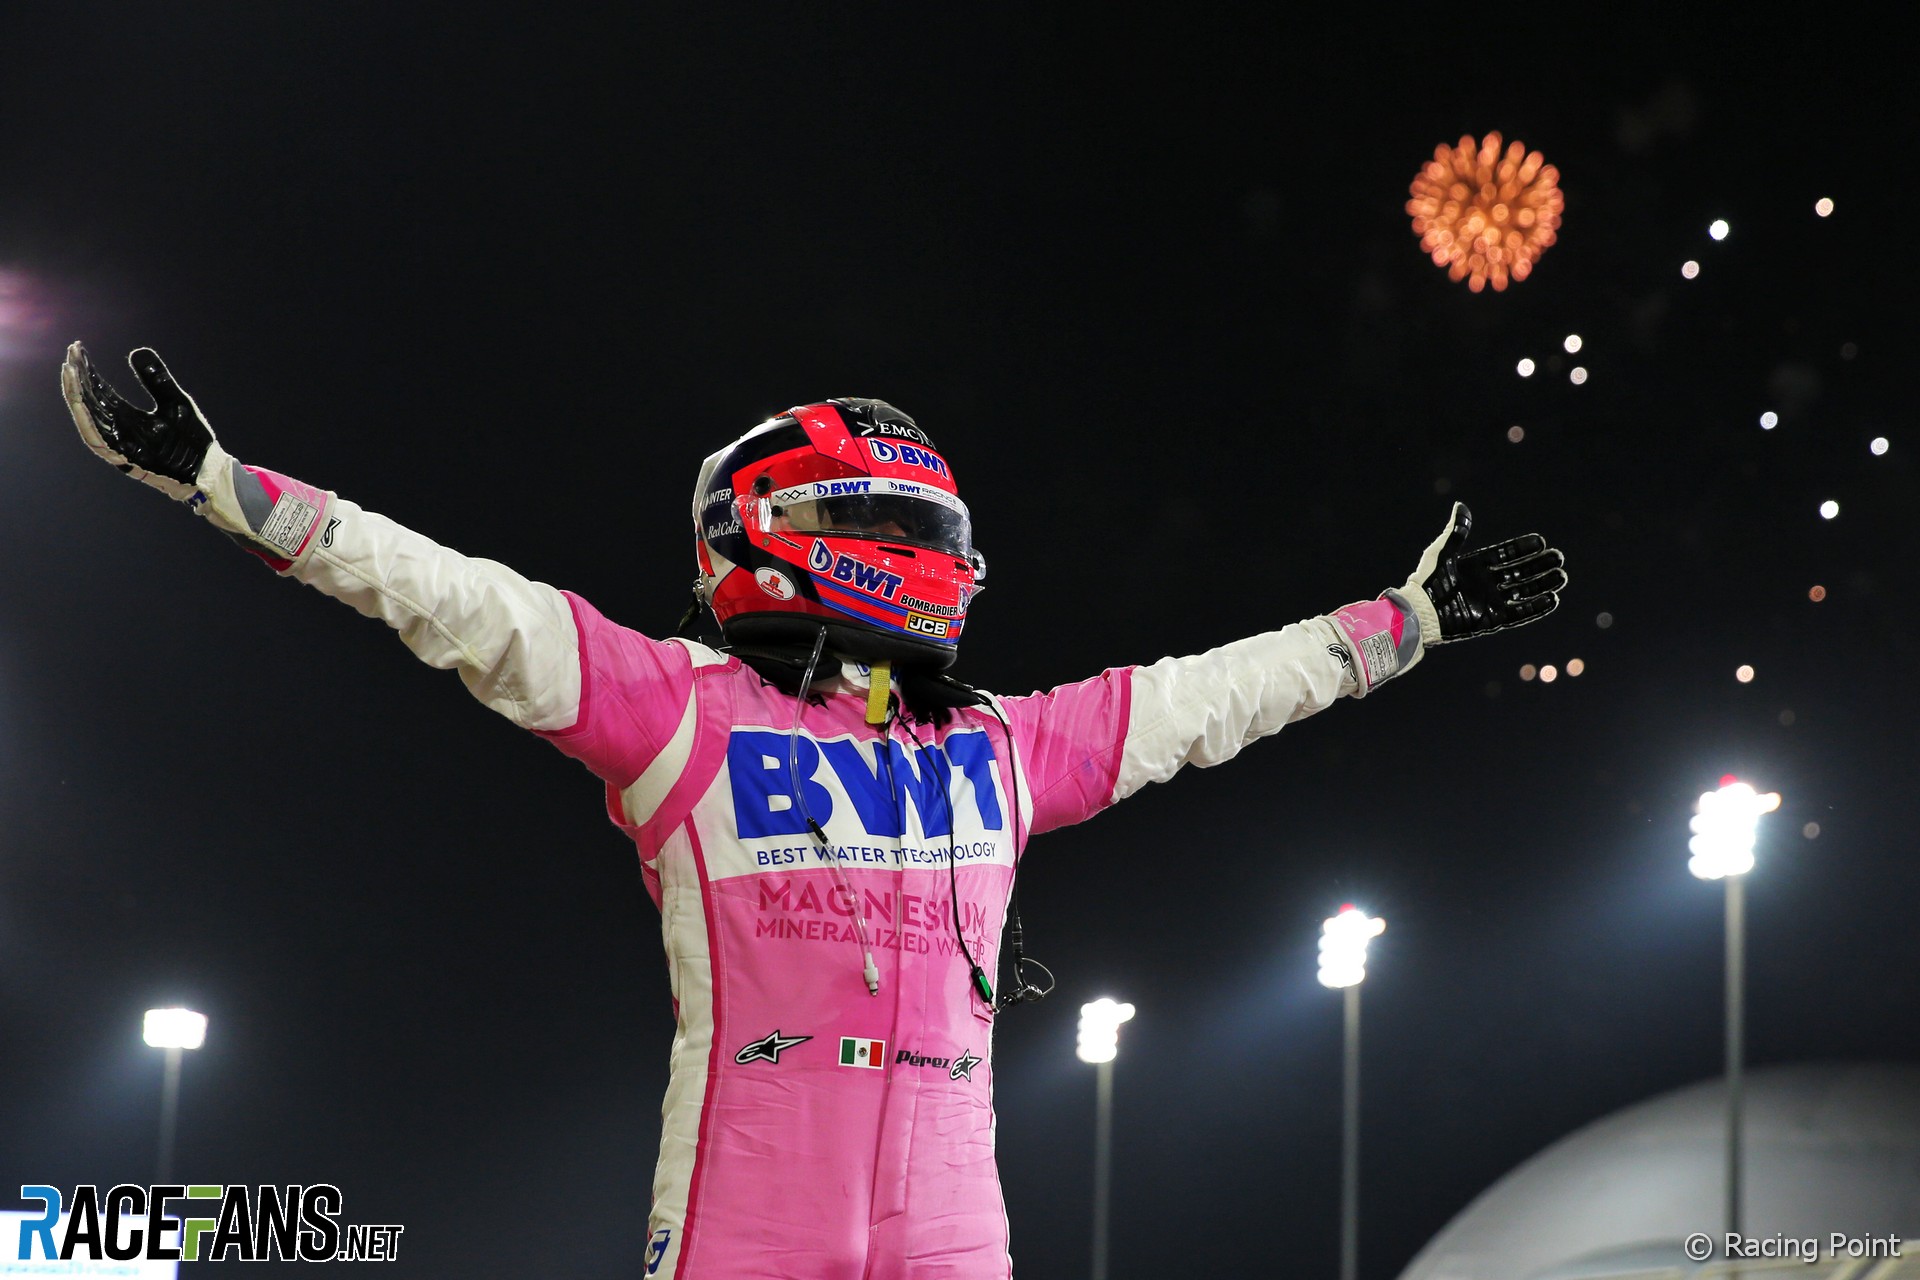 Sergio Perez, Racing Point, Bahrain International Circuit, 2020